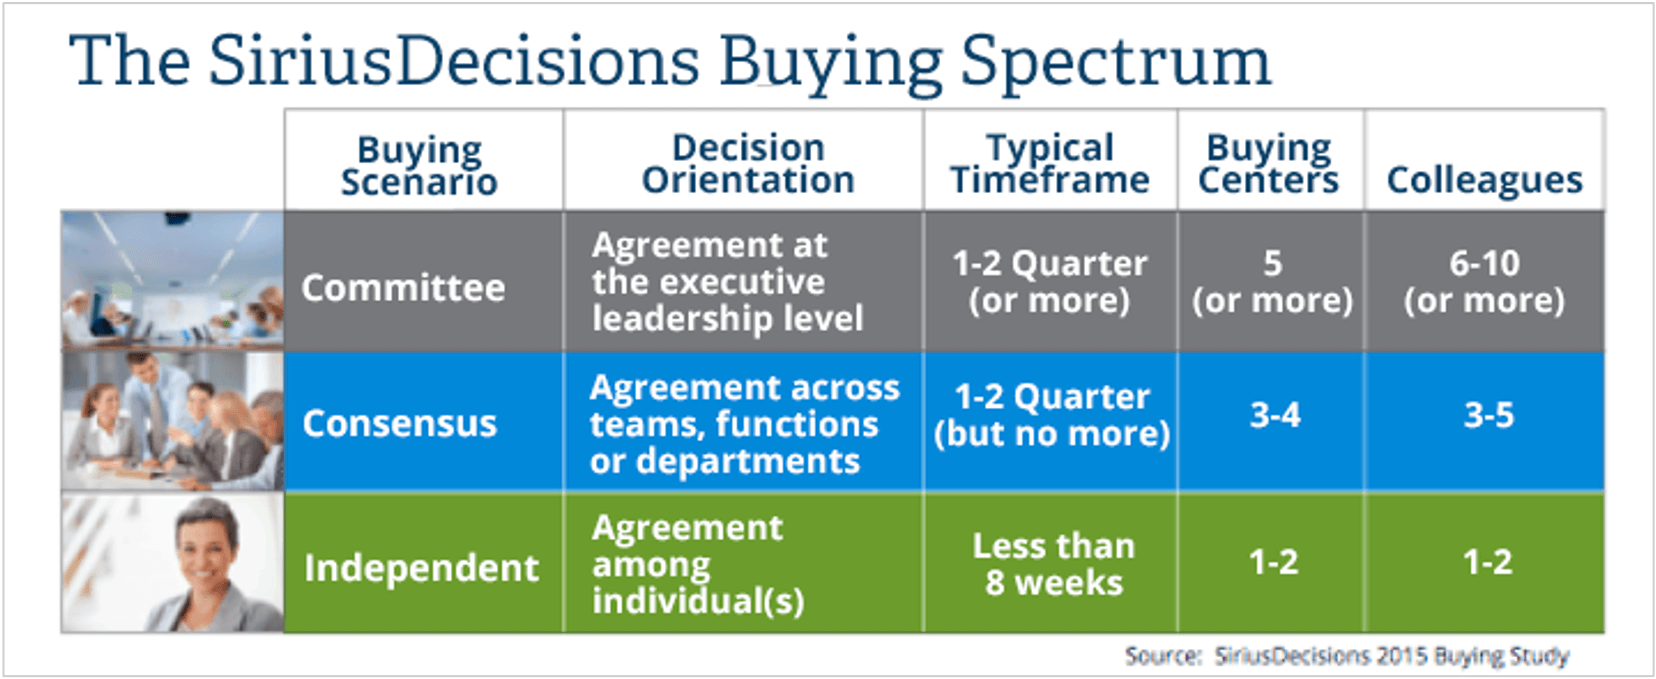  Three levels of buying scenarios: committee, consensus, independent